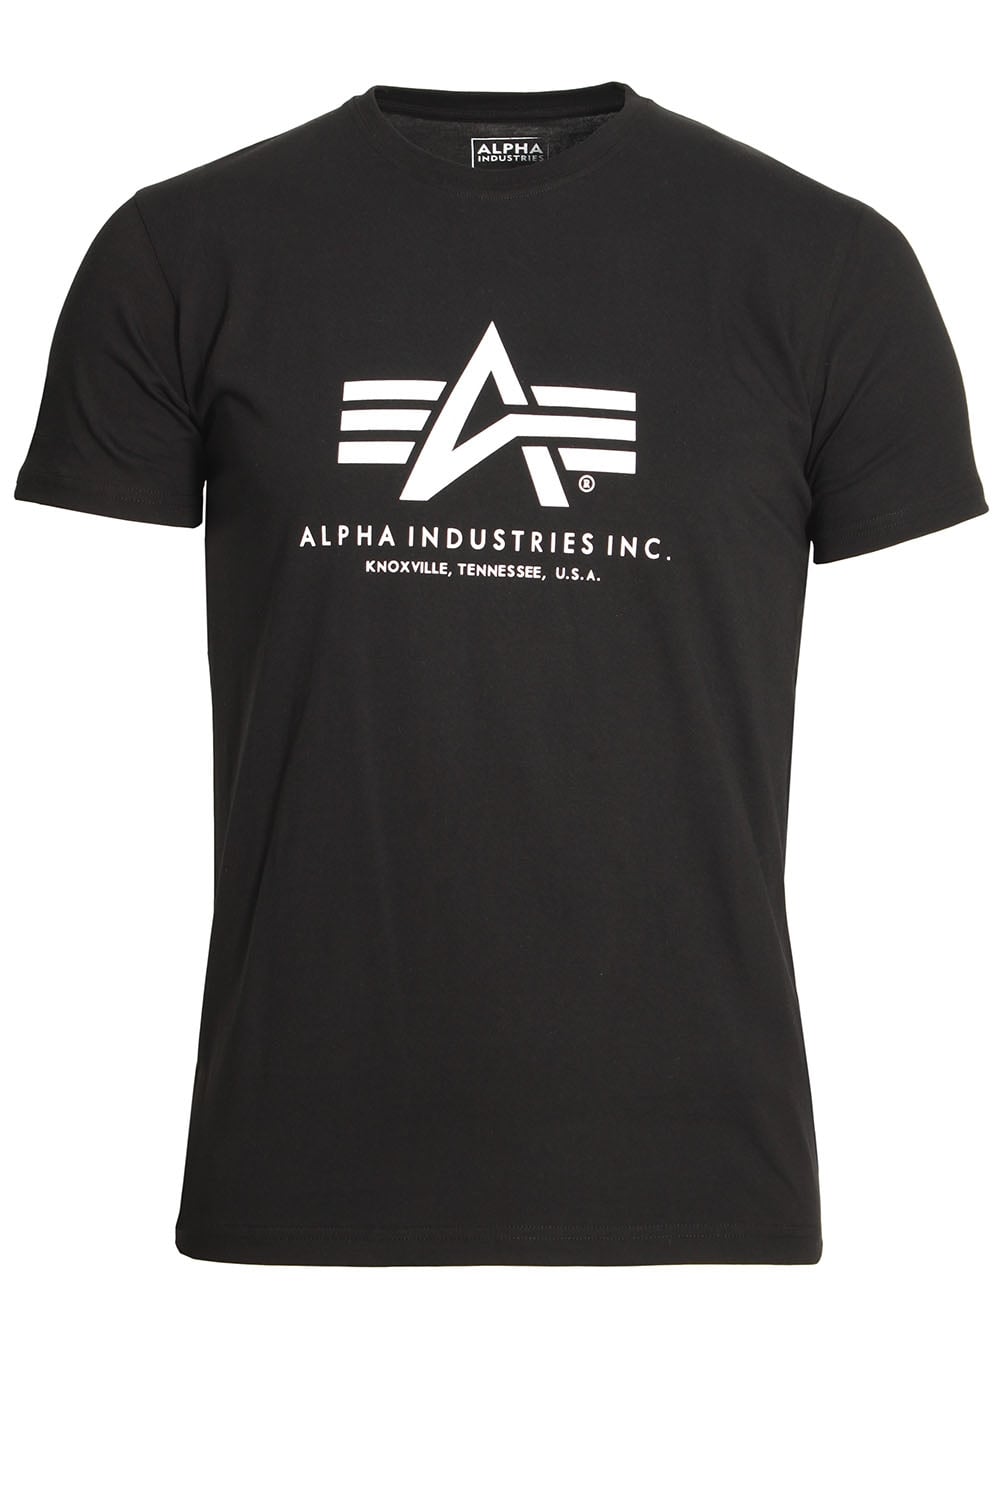 Industries The Logo (100501/03) 515 T-Shirt - - Black Basic Large Alpha